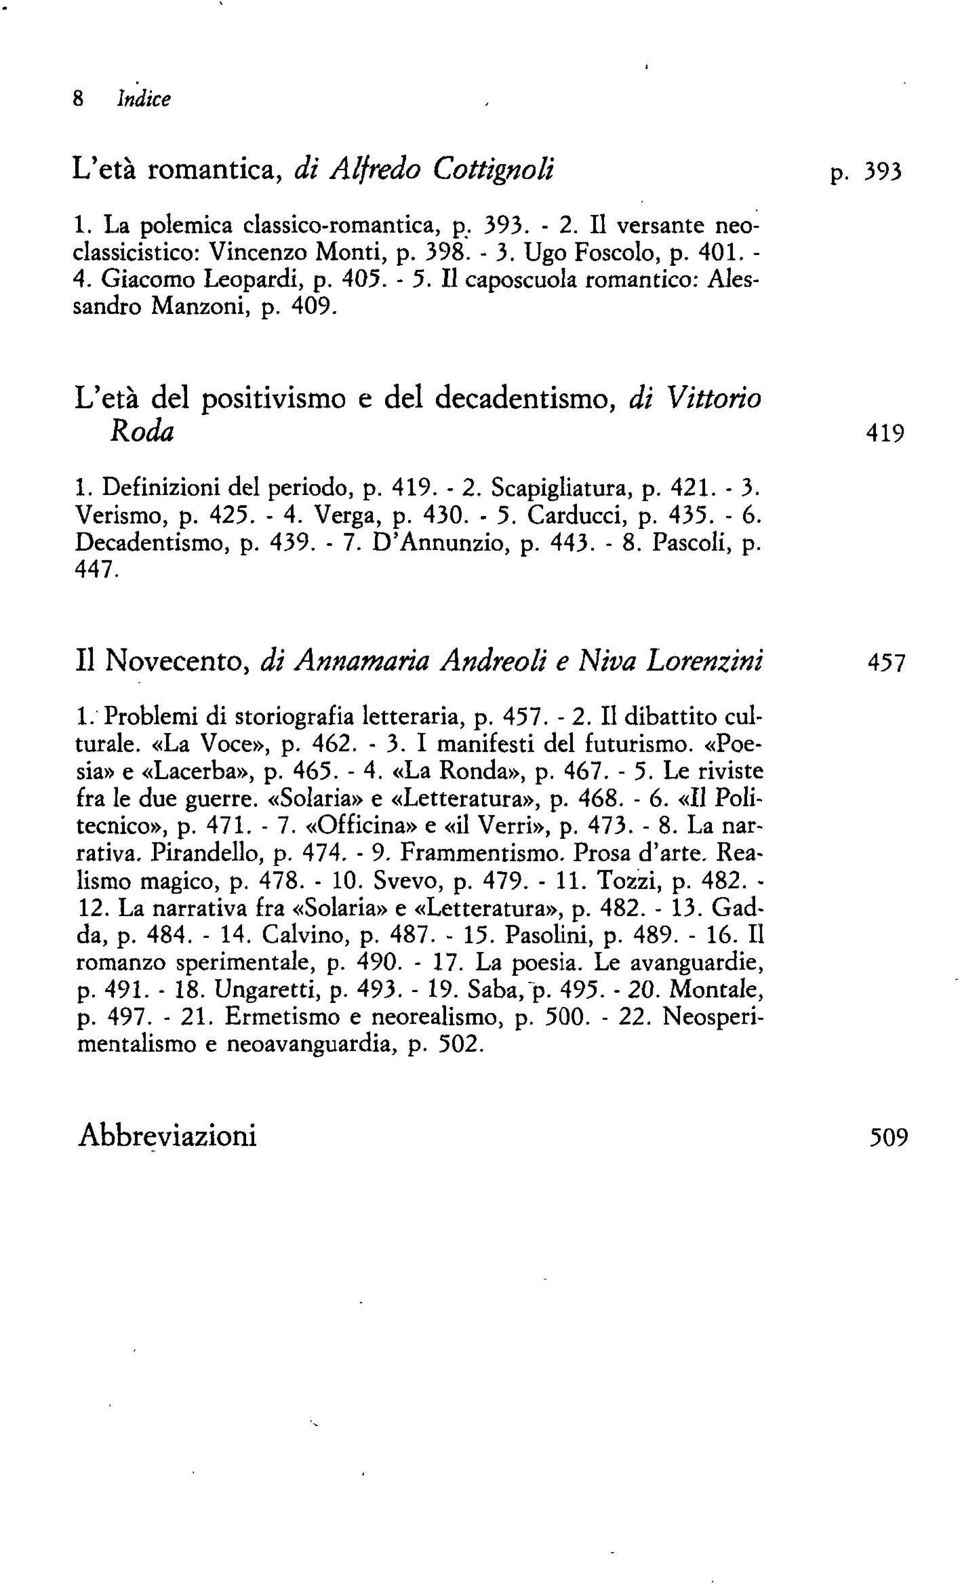 Scapigliatura, p. 421. - 3. Verismo, p. 425. - 4. Verga, p. 430. - 5. Carducci, p. 435. - 6. Decadentismo, p. 439. - 7. D'Annunzio, p. 443. - 8. Pascoli, p. 447.